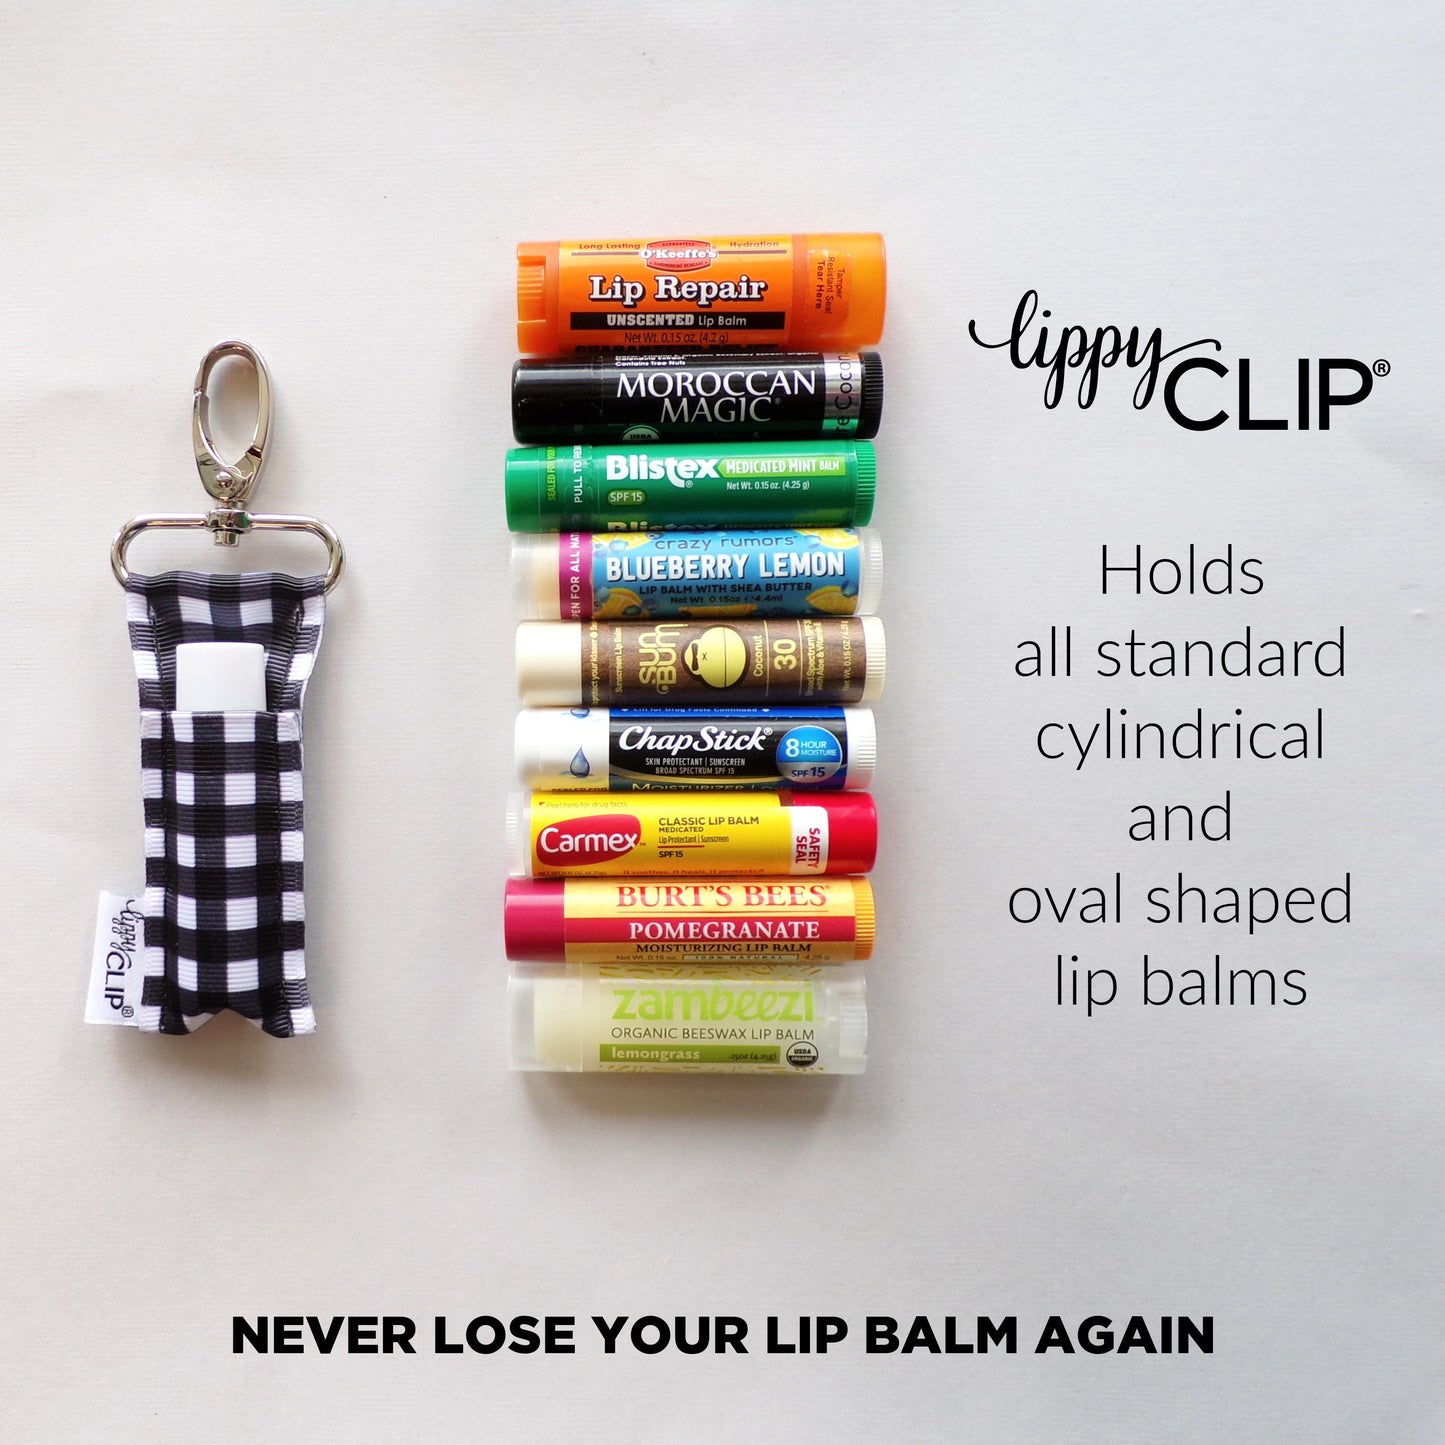 Old Glory LippyClip® Lip Balm Holder